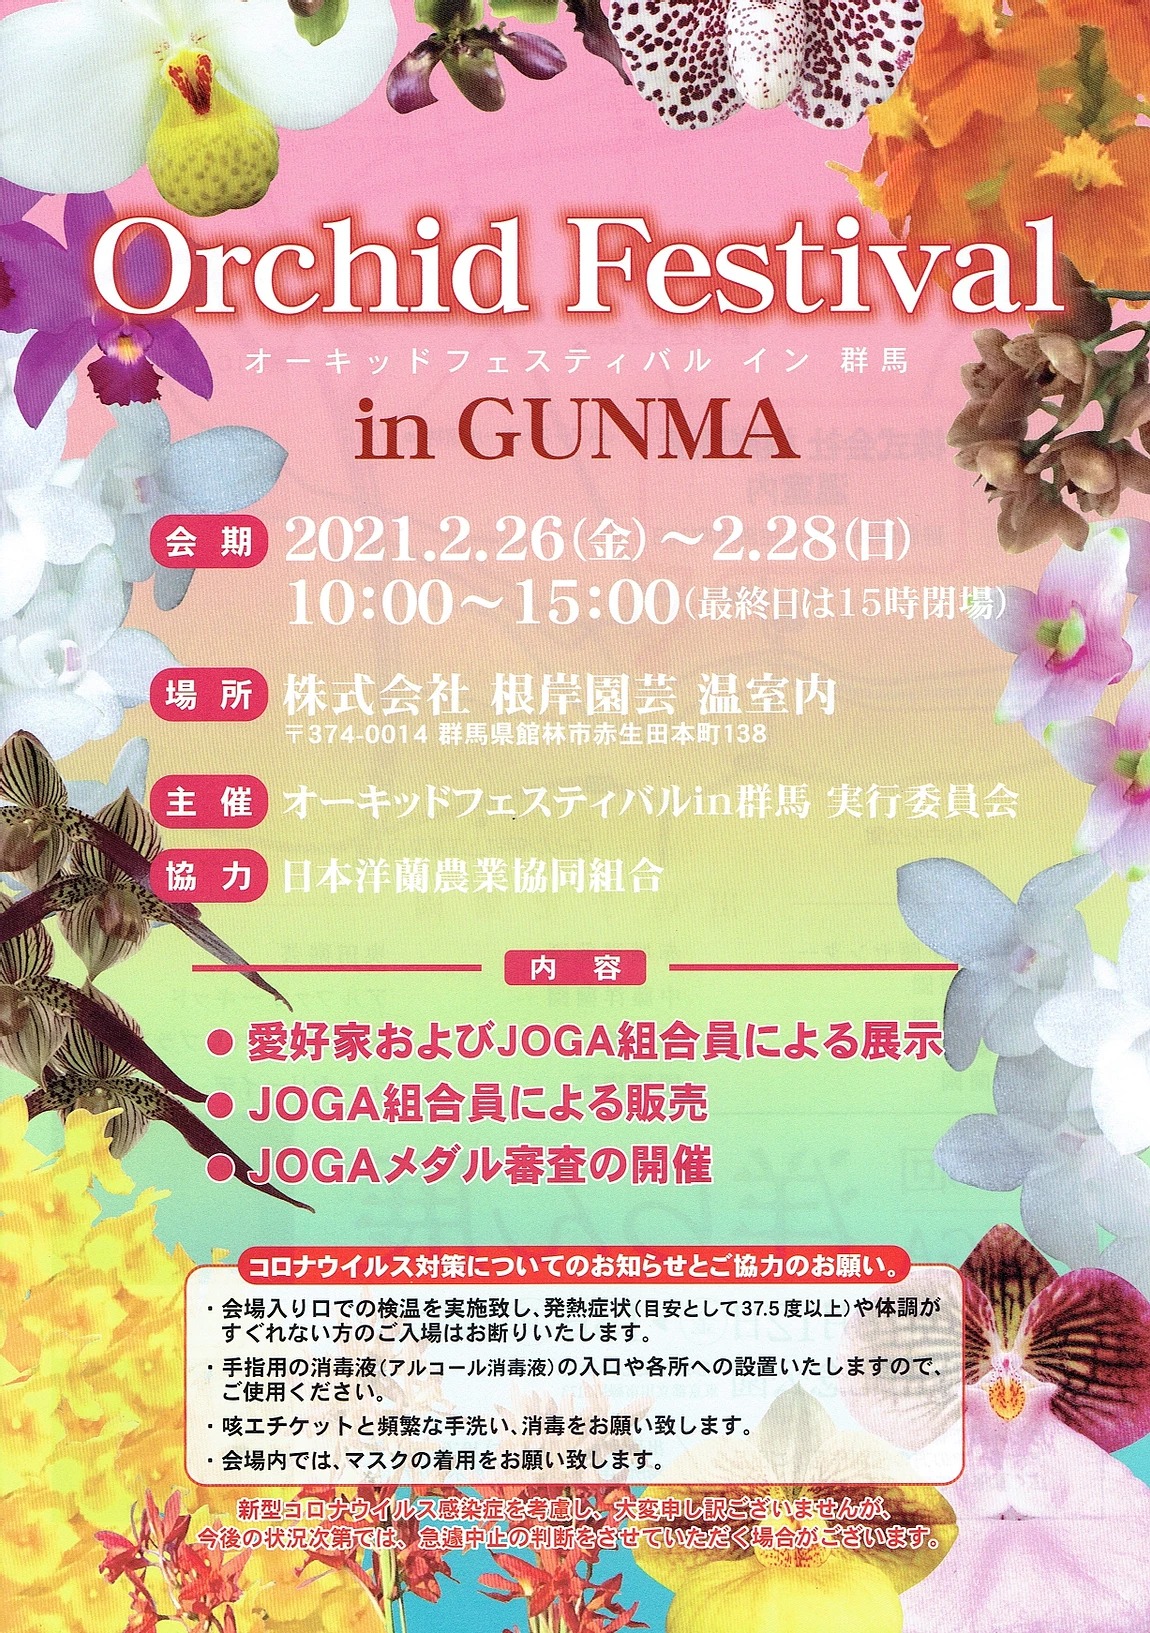 Orchid Festival in GUNMA